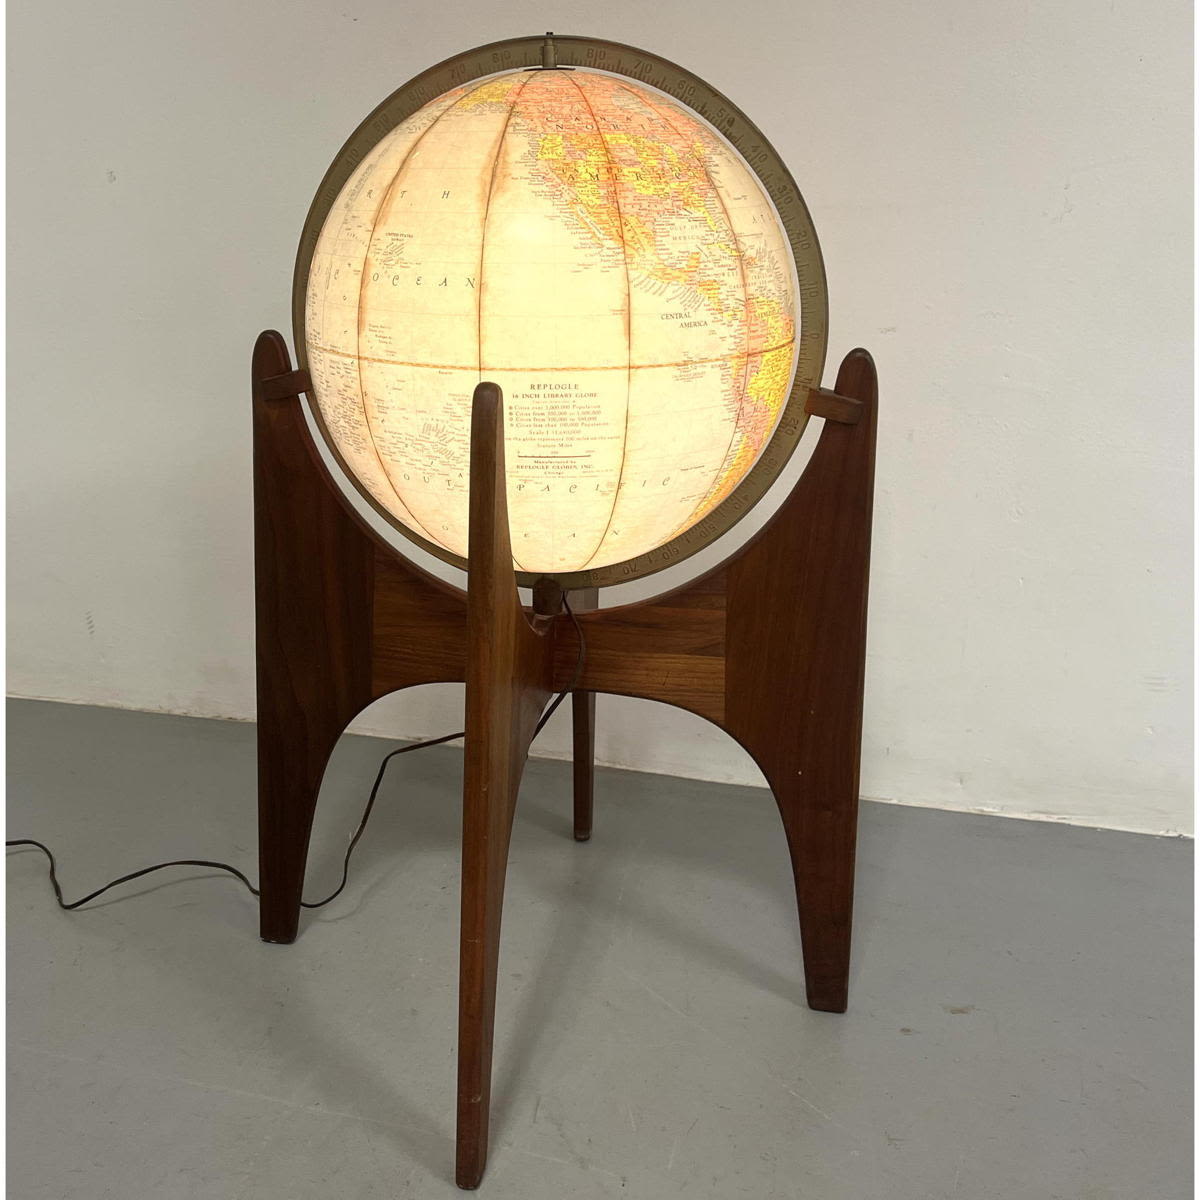 Light up World Globe by Adrian